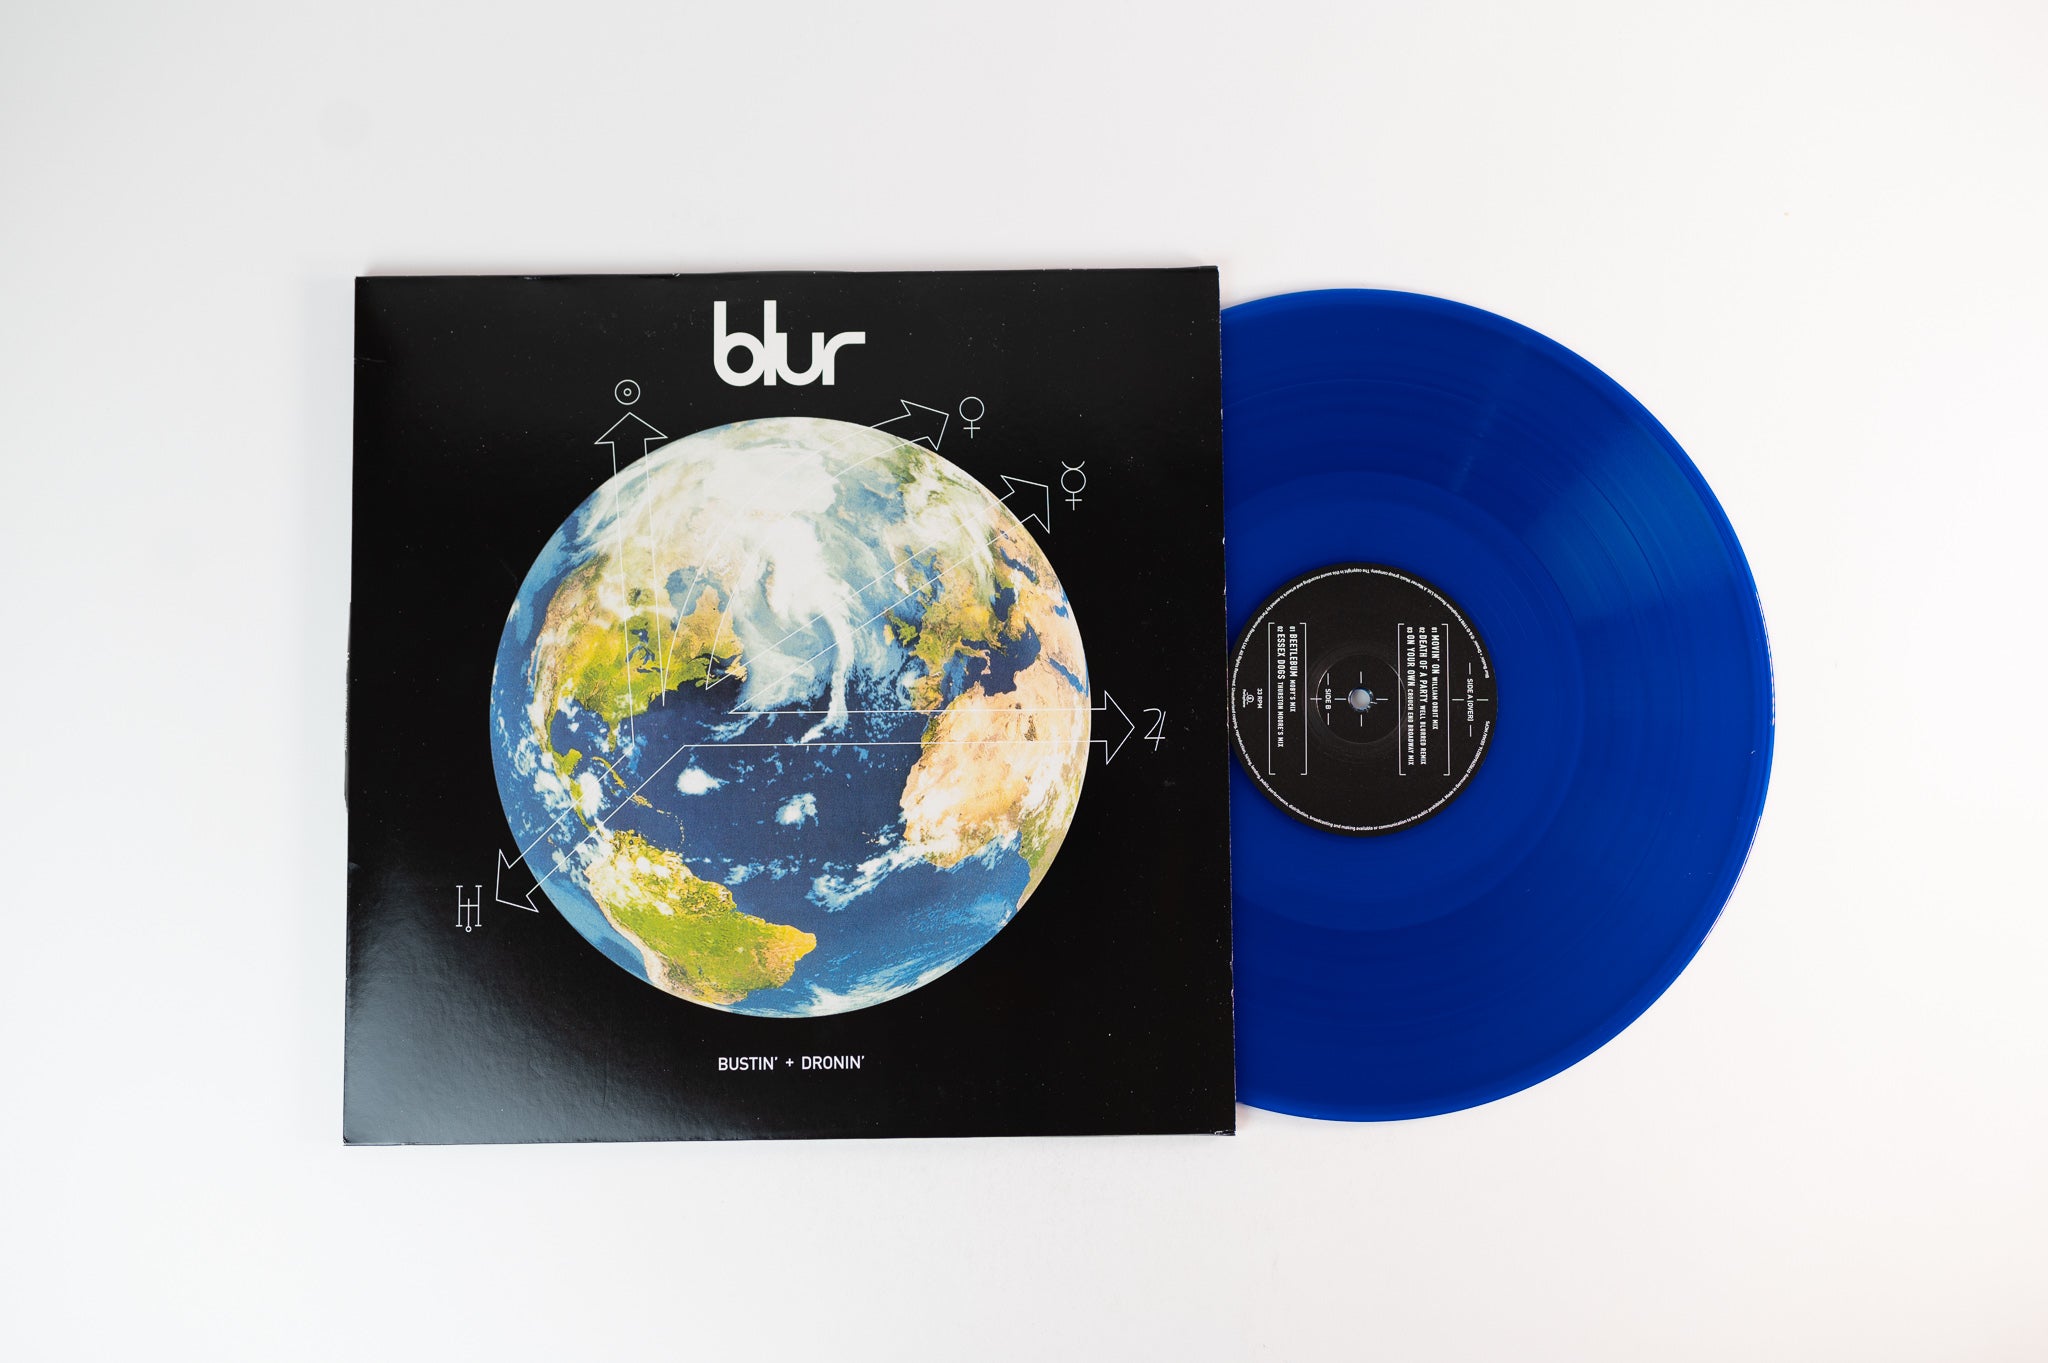 Blur - Bustin' + Dronin' on Parlophone Blue & Green Vinyl Reissue